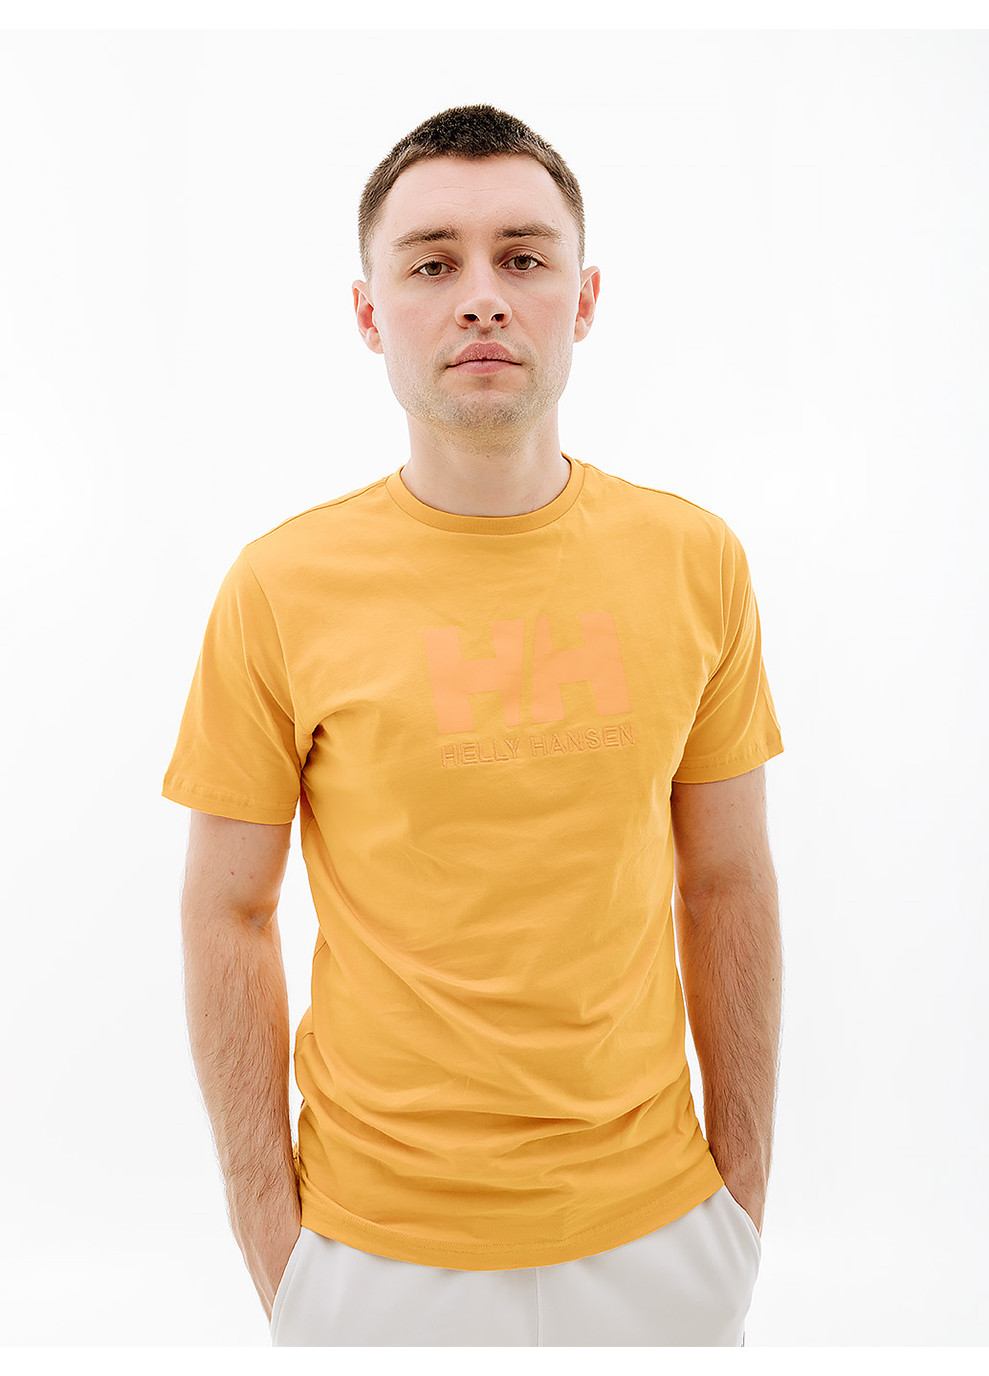 Помаранчева чоловіча футболка hhogo t-shirt помаранчевий Helly Hansen